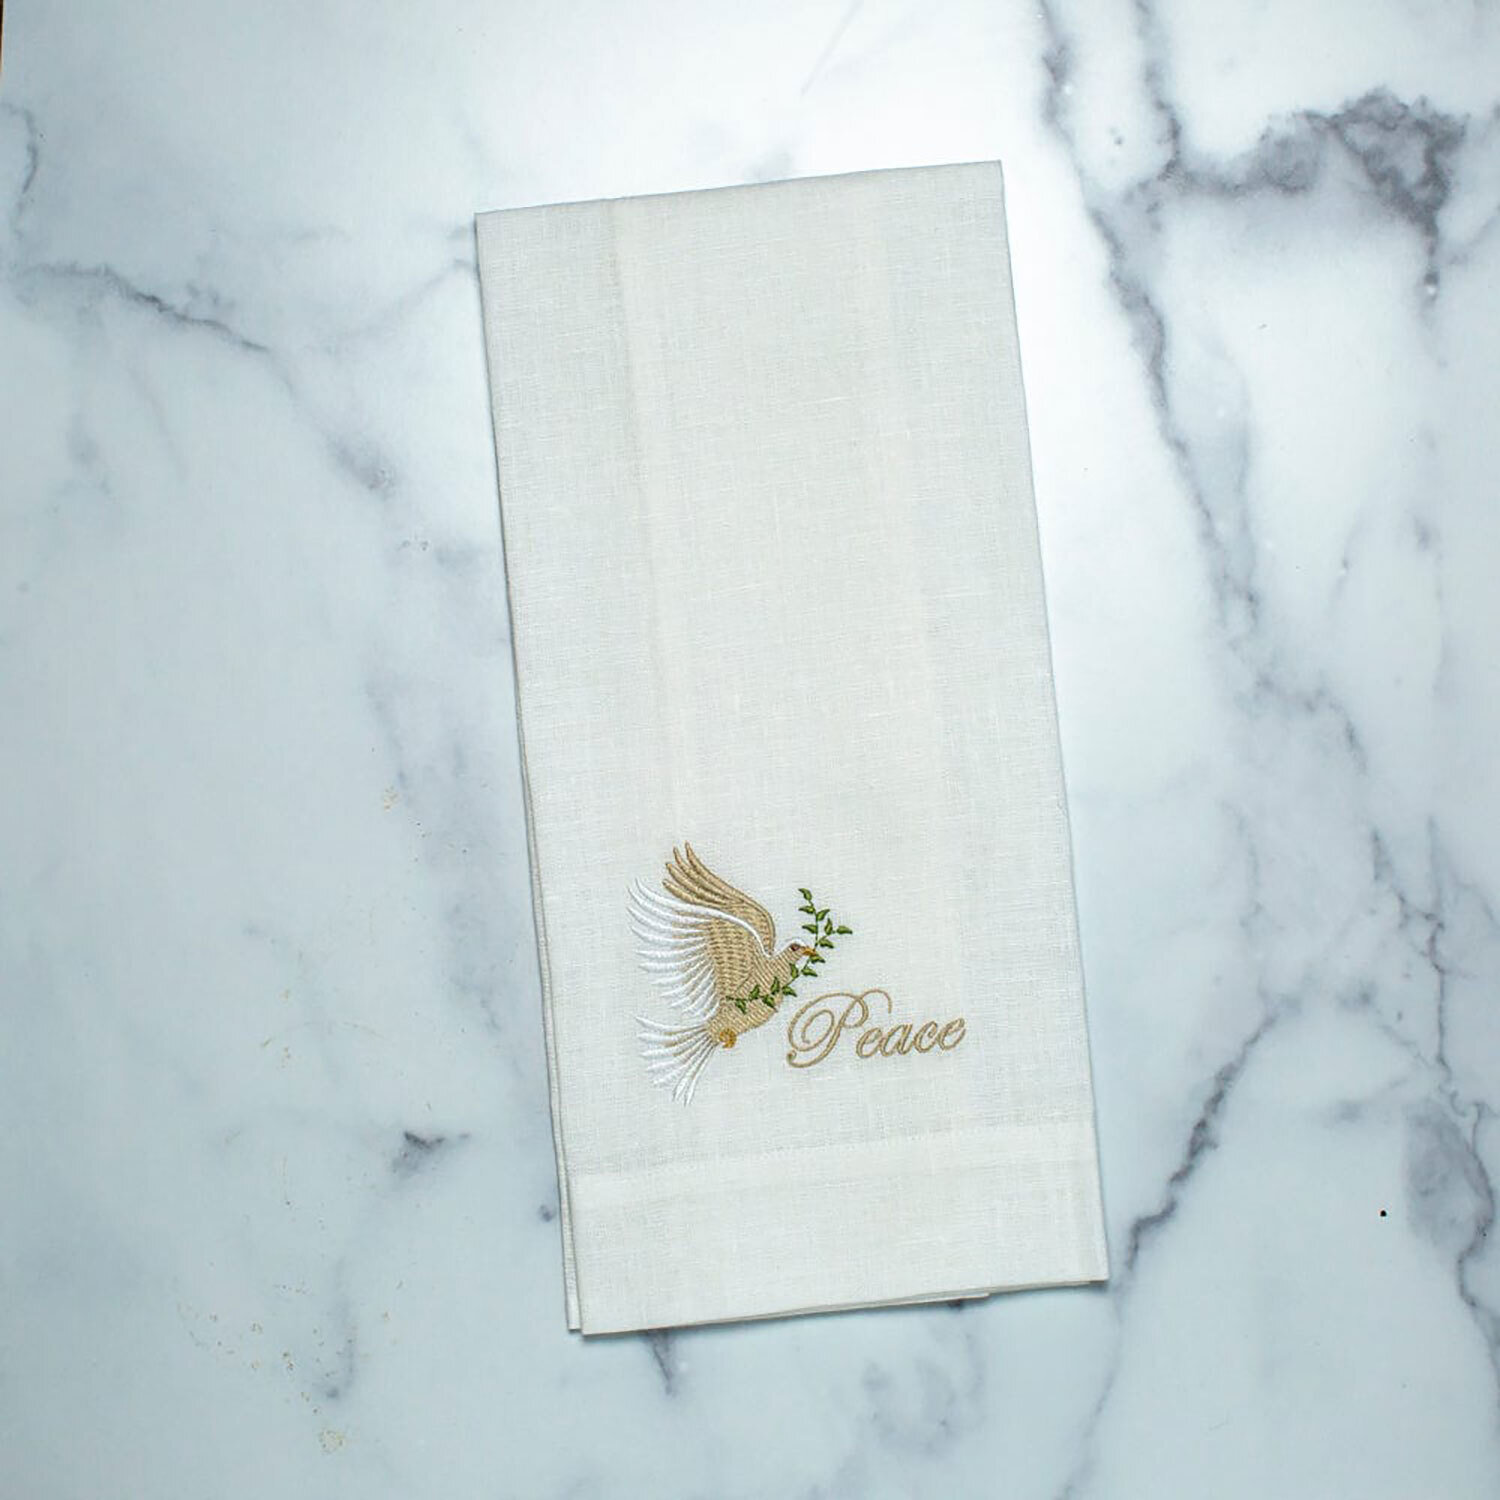 Crown Dove of Peace Linen Towel White Set of 4 T1028